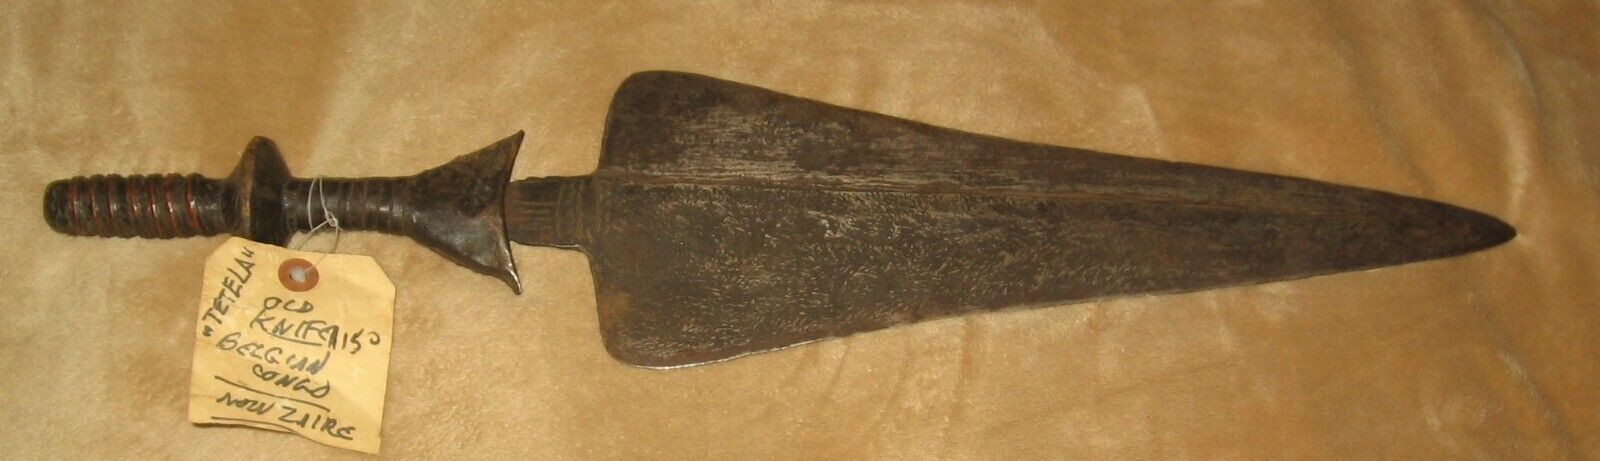 Antique African Ceremonial Knife -19th C - Belgium Congo Appox21 1/2 Inches Long